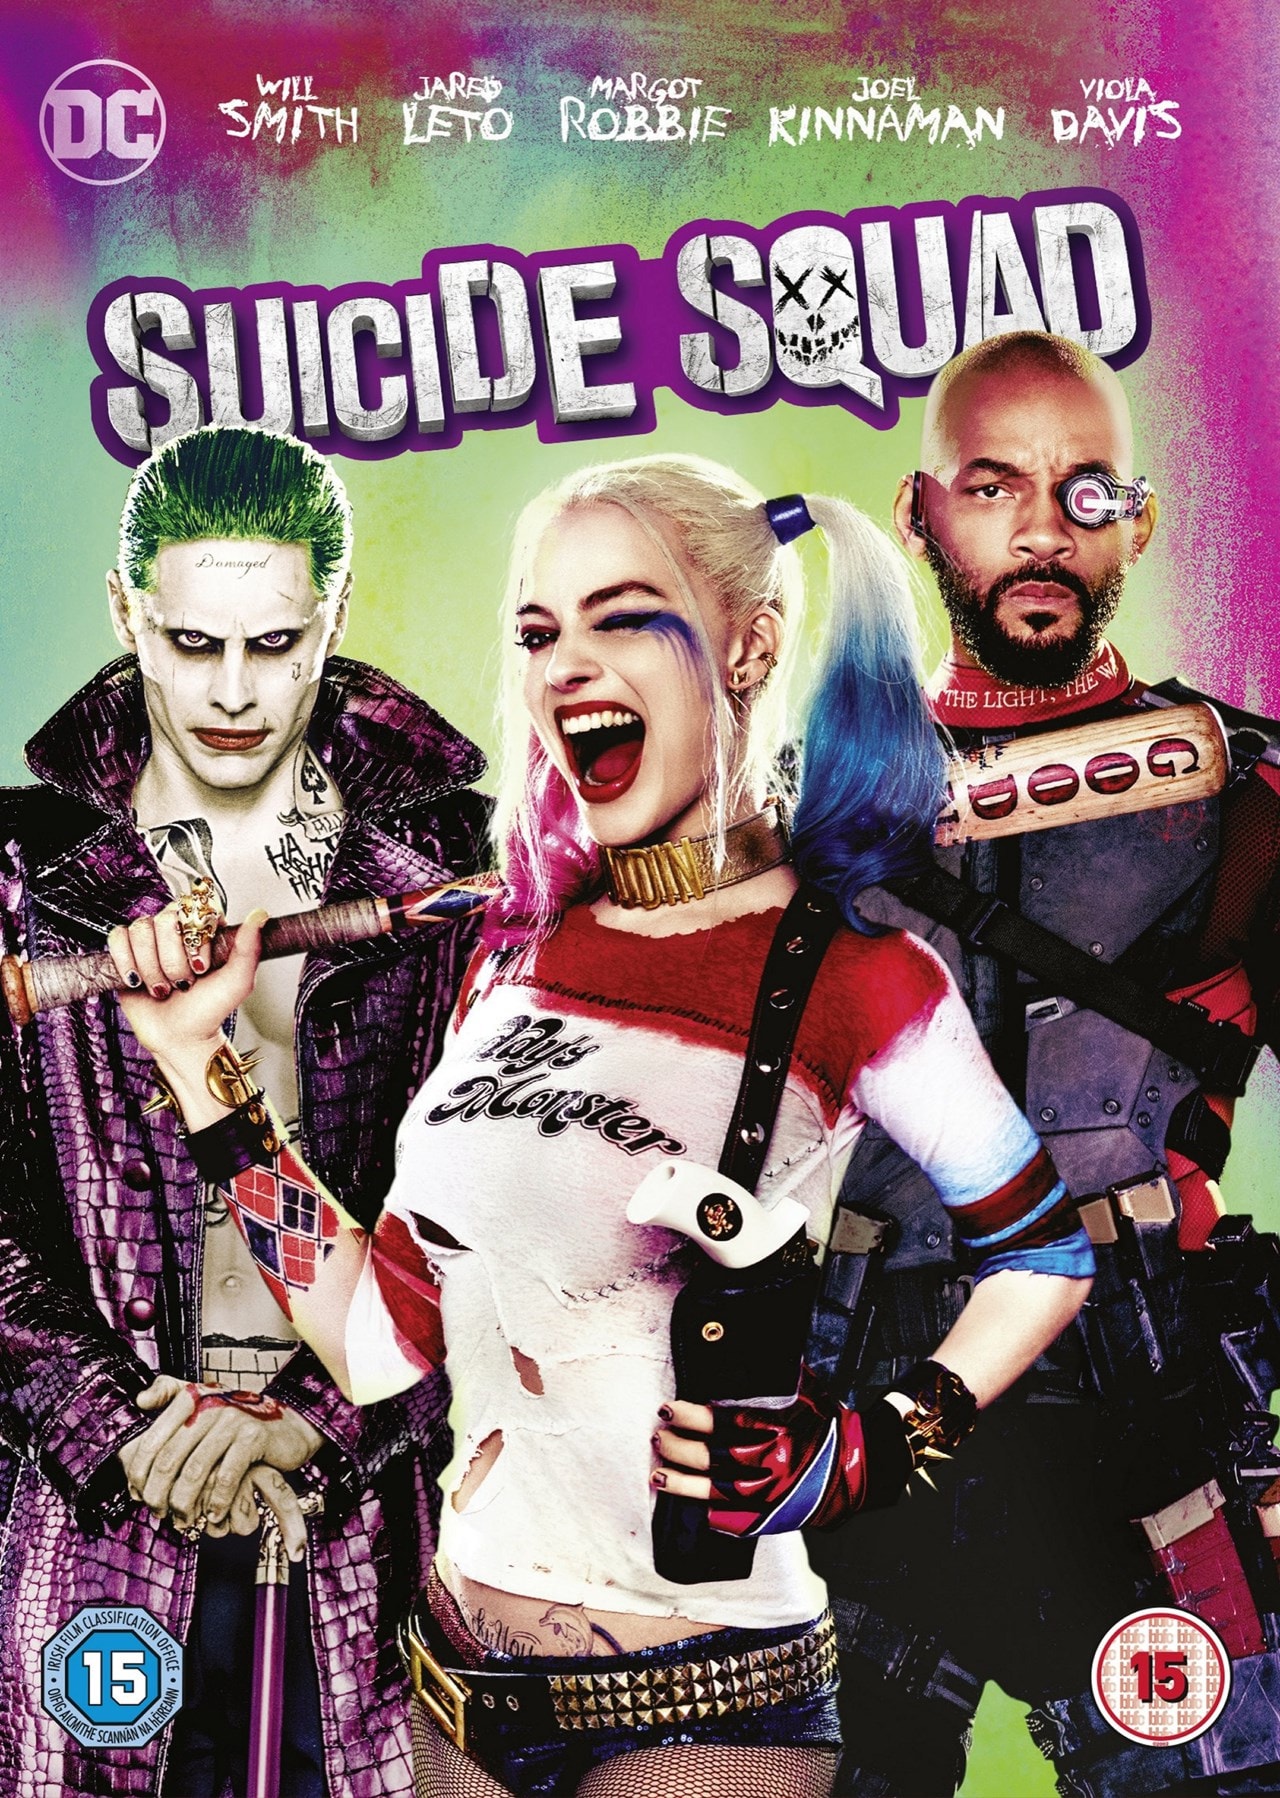 Suicide Squad 1 Film Online Subtitrat Suicide Squad | DVD | Free shipping over £20 | HMV Store